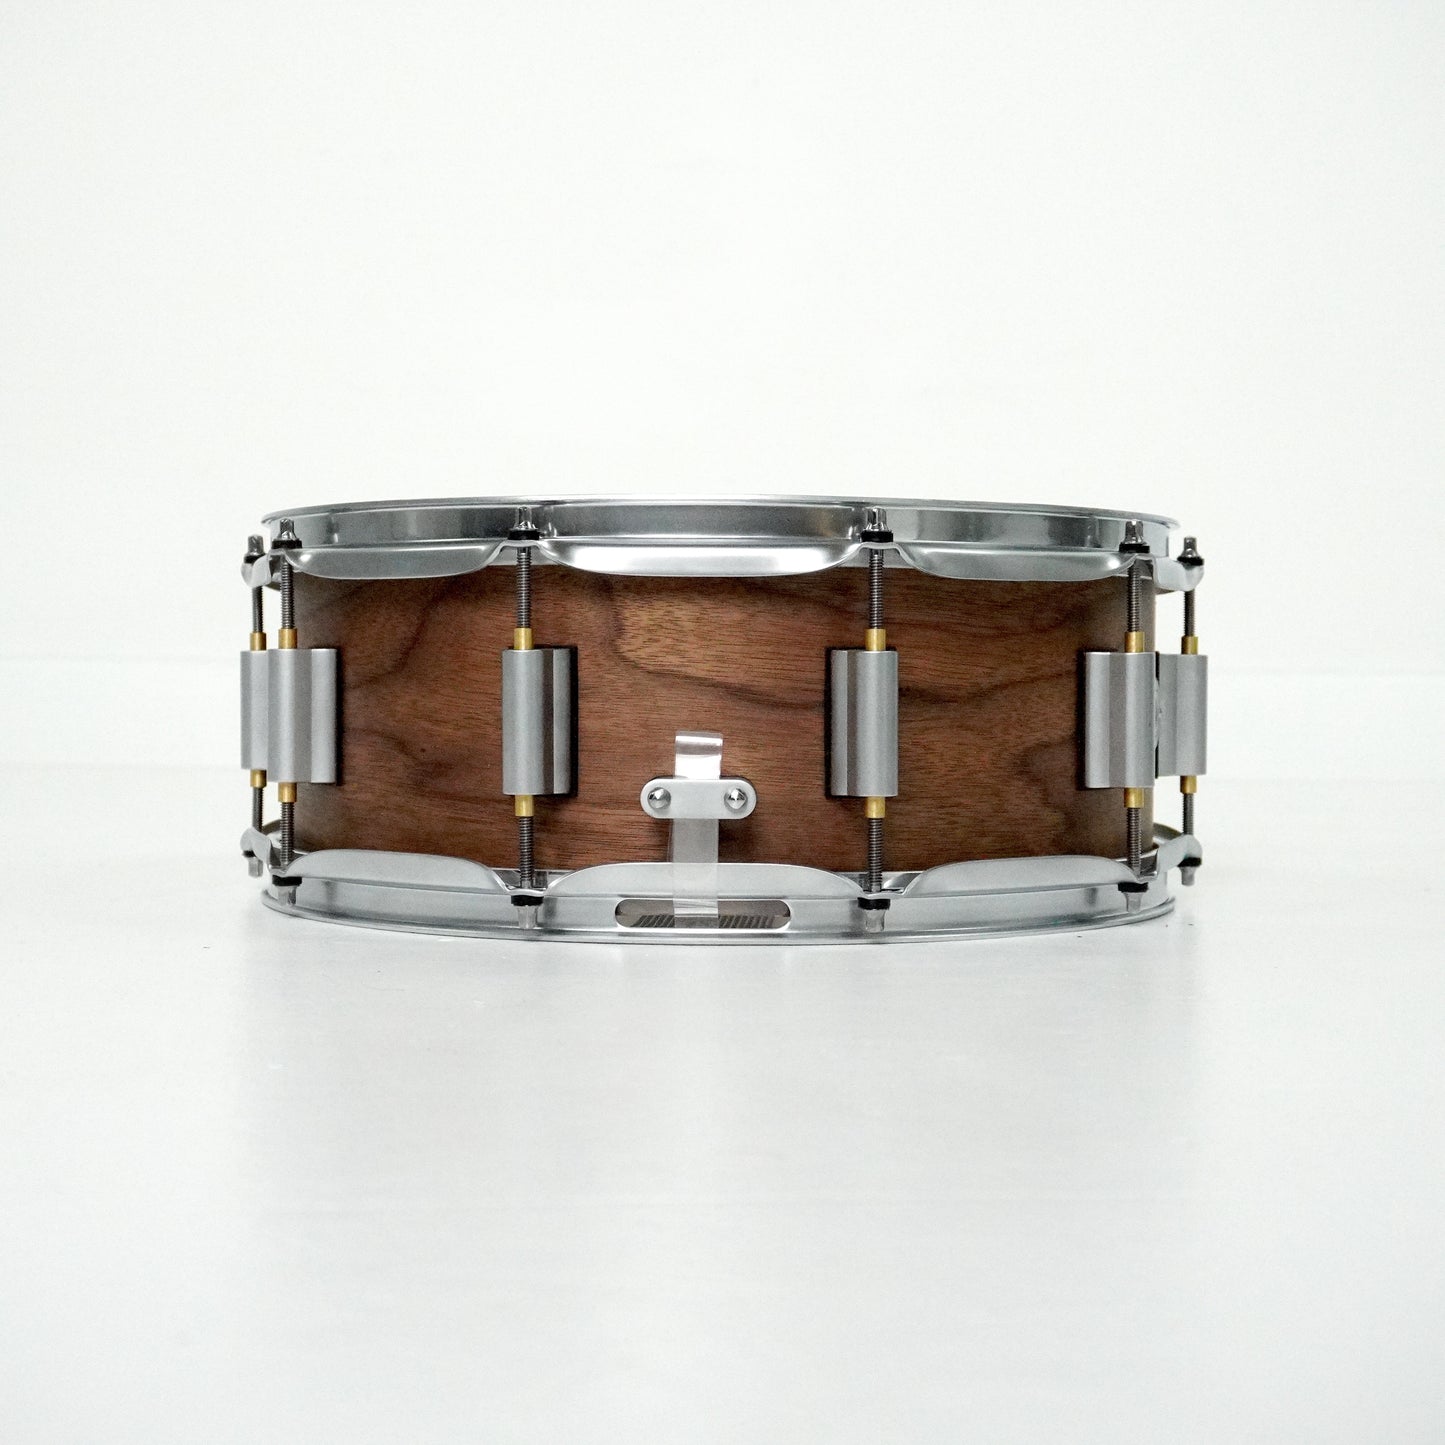 DrumCraft Series 6 14” x 5.5” Snare